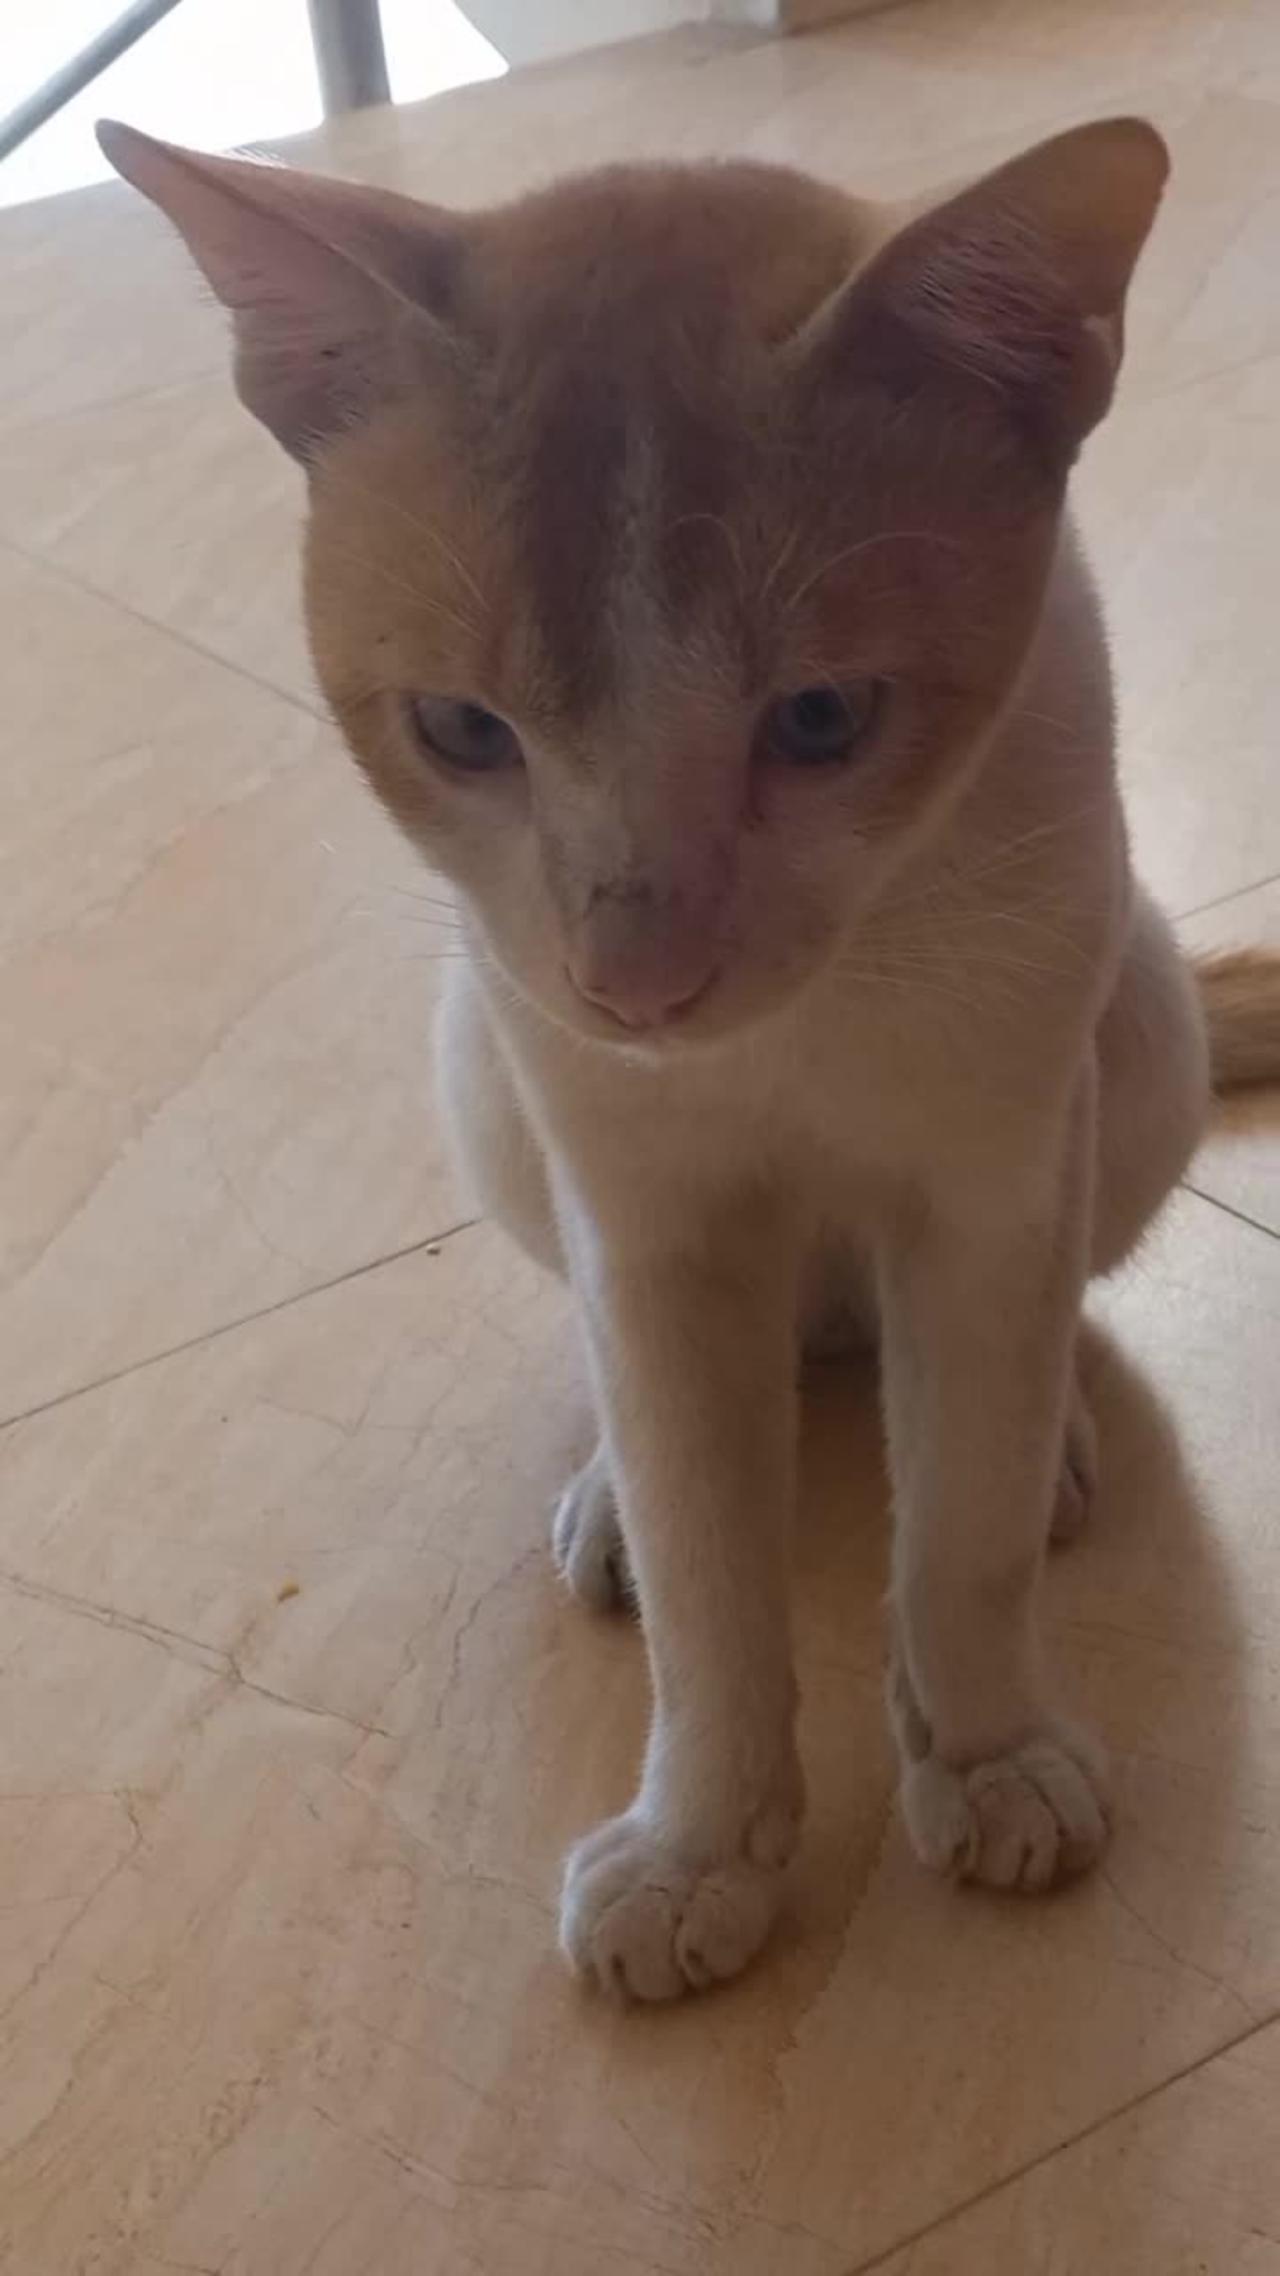 Cute white cat reaction video